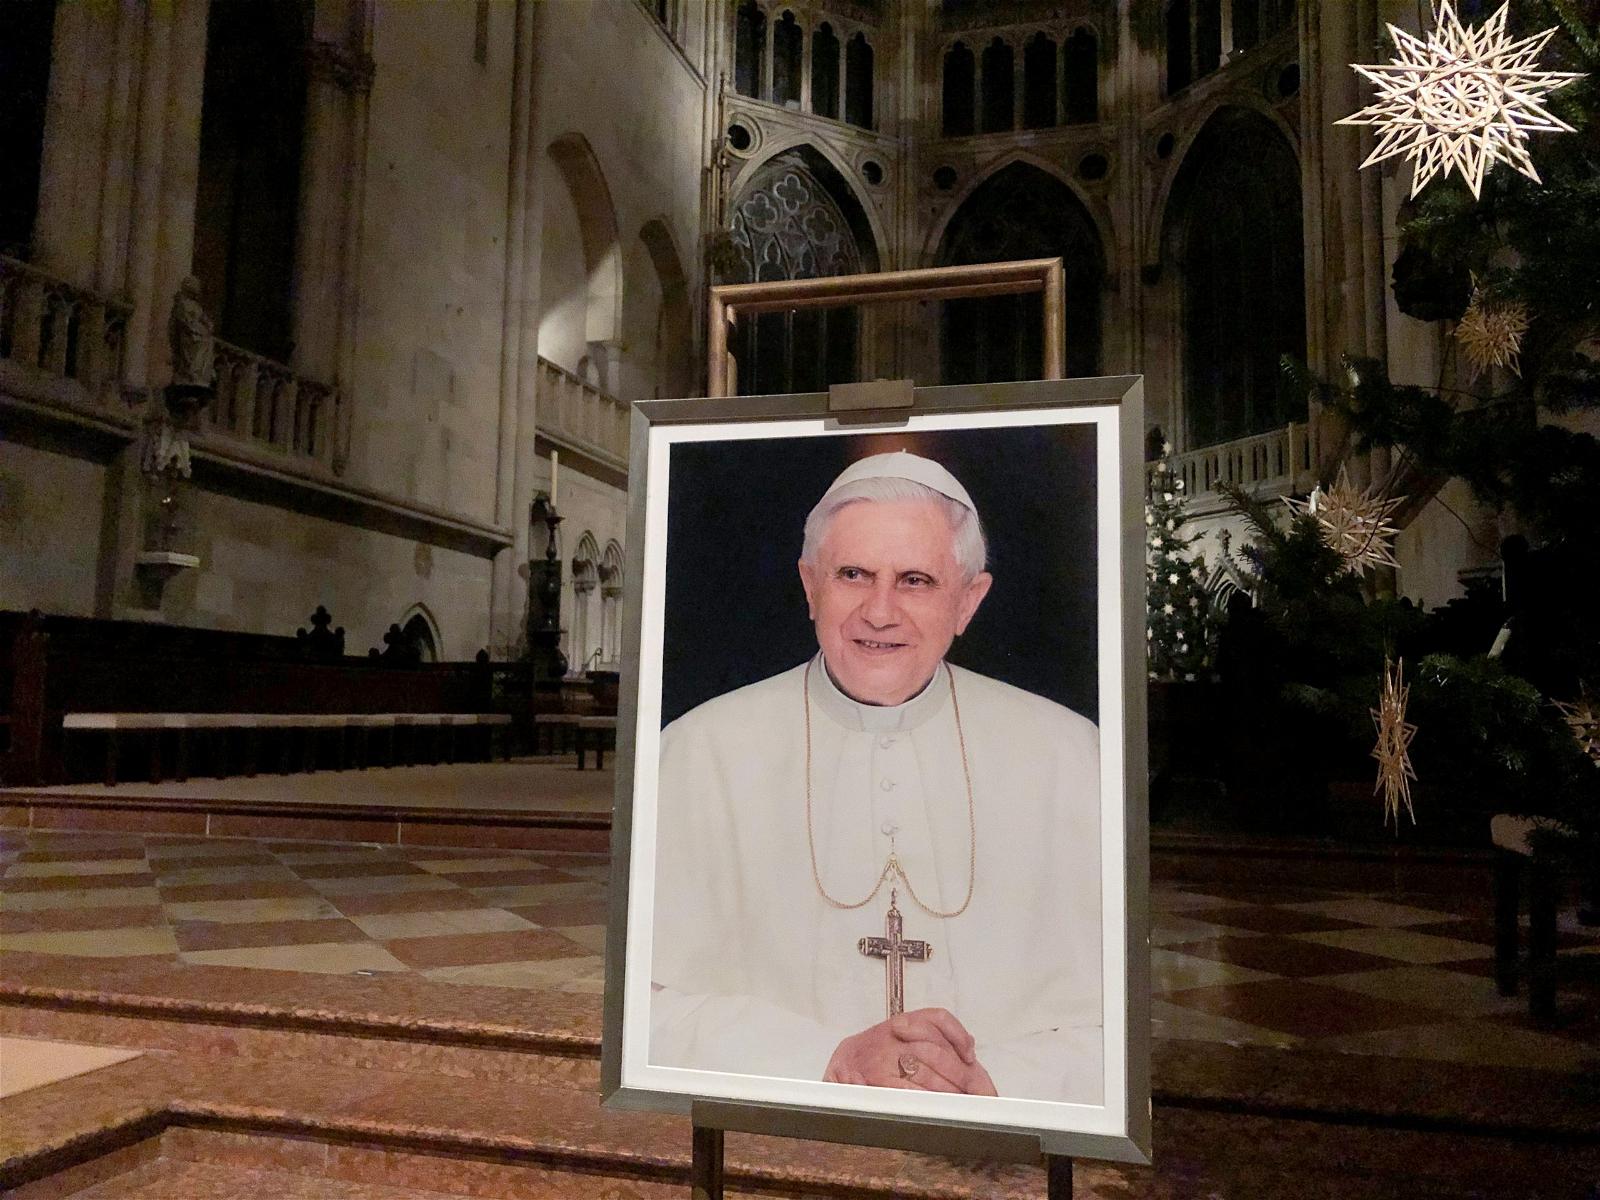 Catholic Church, CAN, Islamic Scholar eulogise Pope Benedict XVI’s virtues